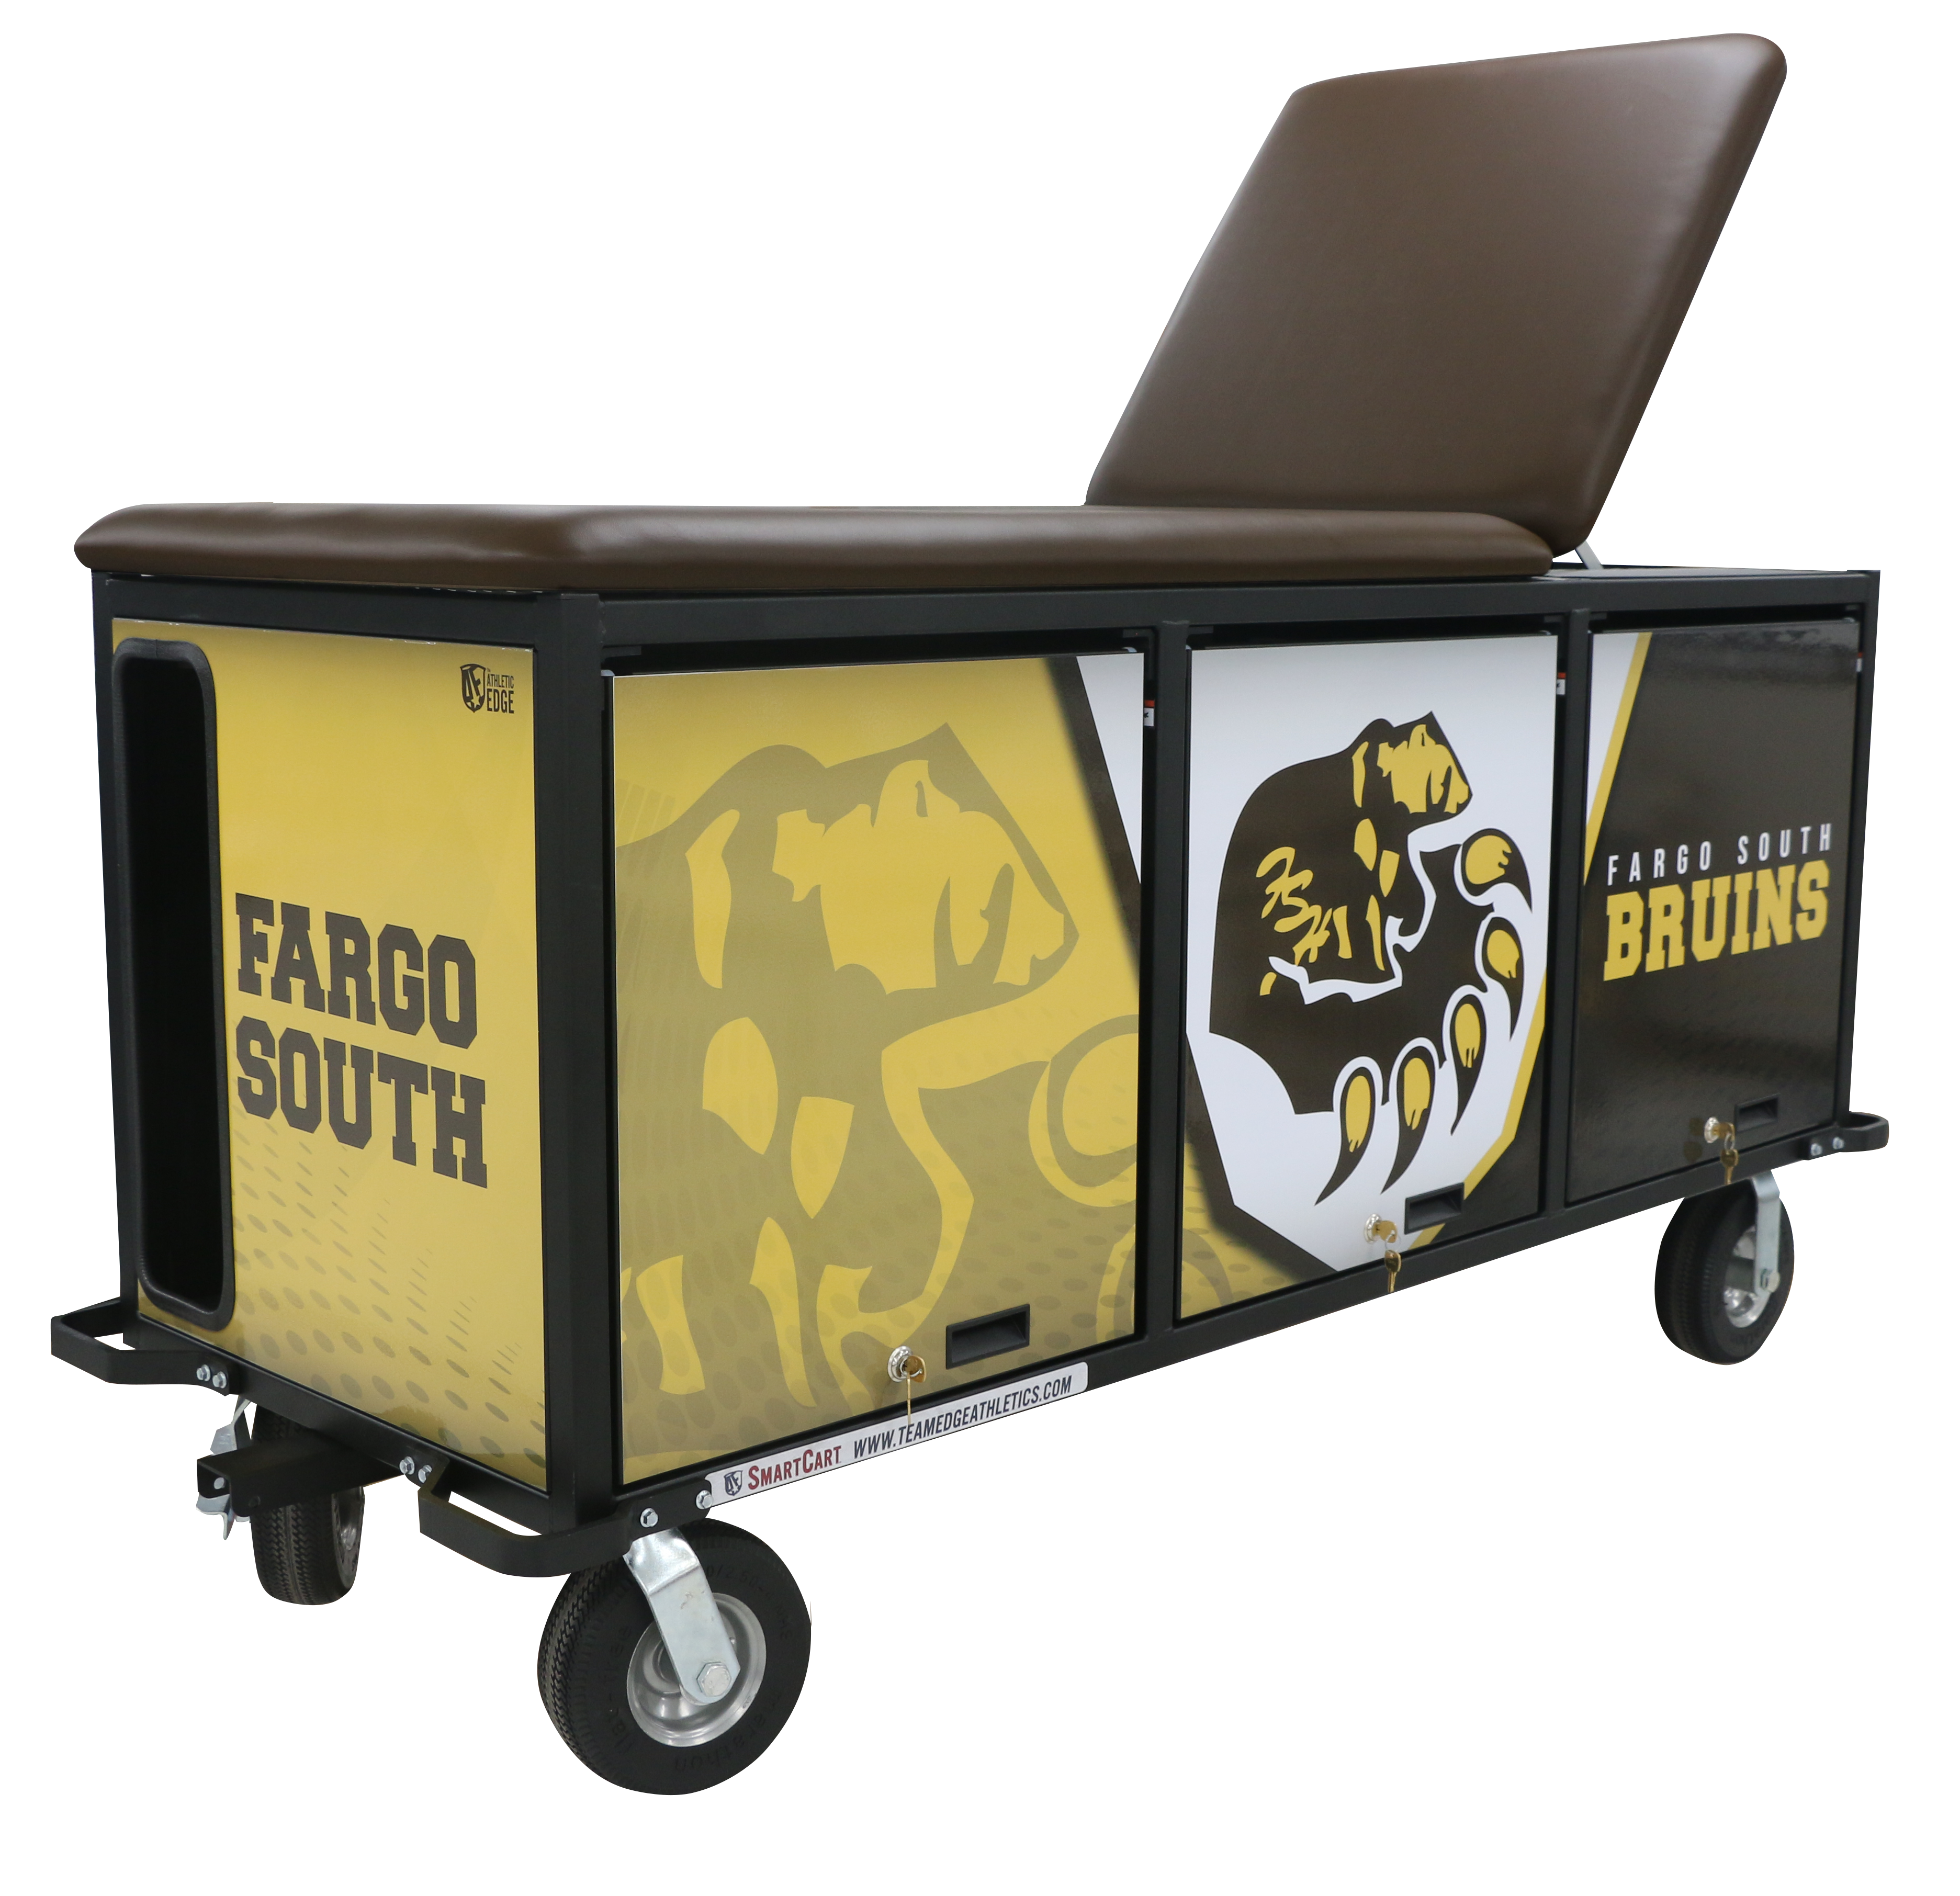 Fargo South-(6 Smart Cart 1)